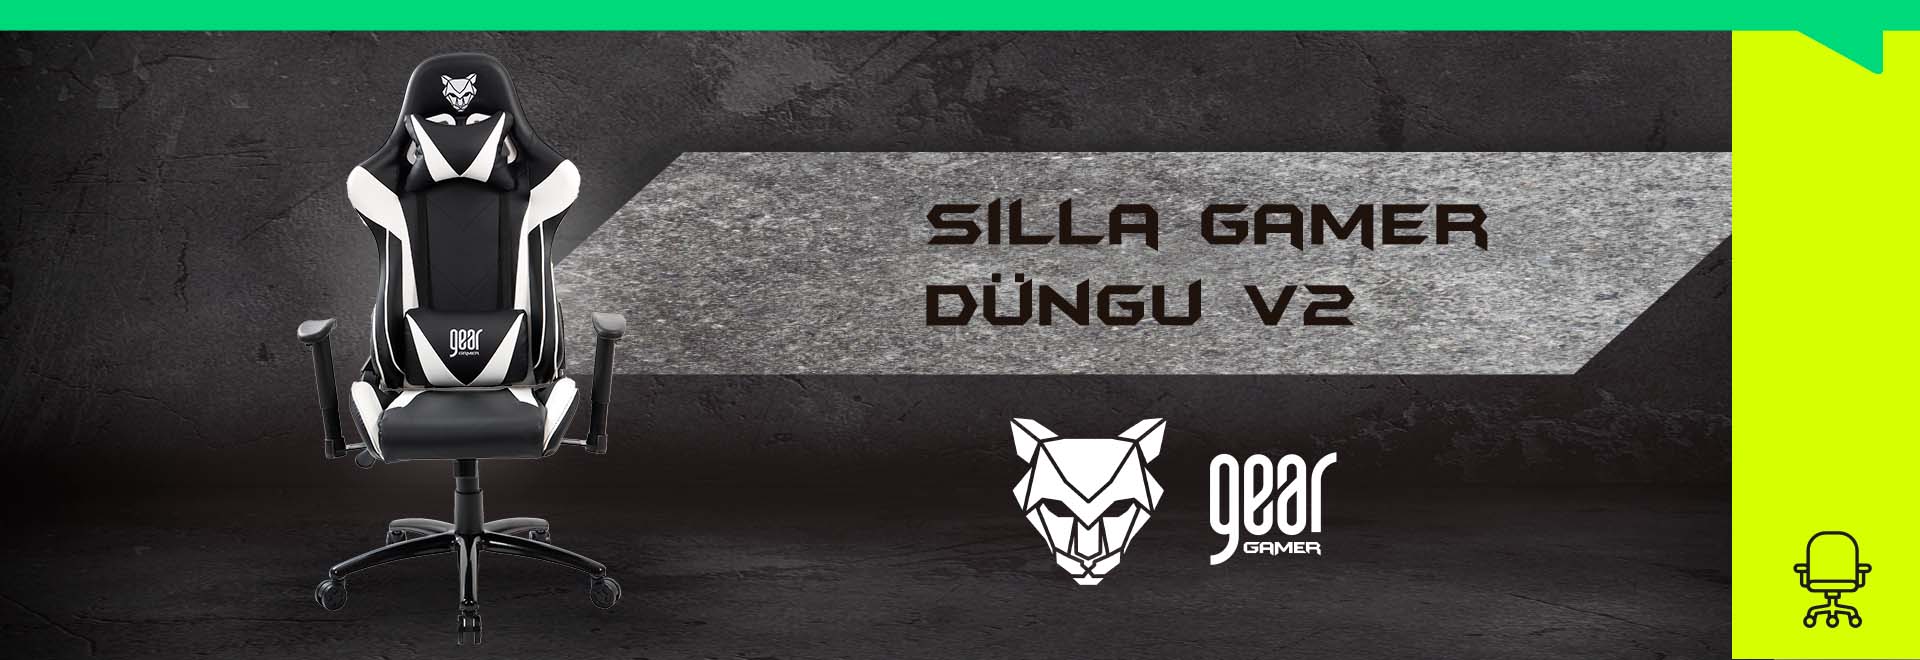 sillas-gear-gamer-dungu